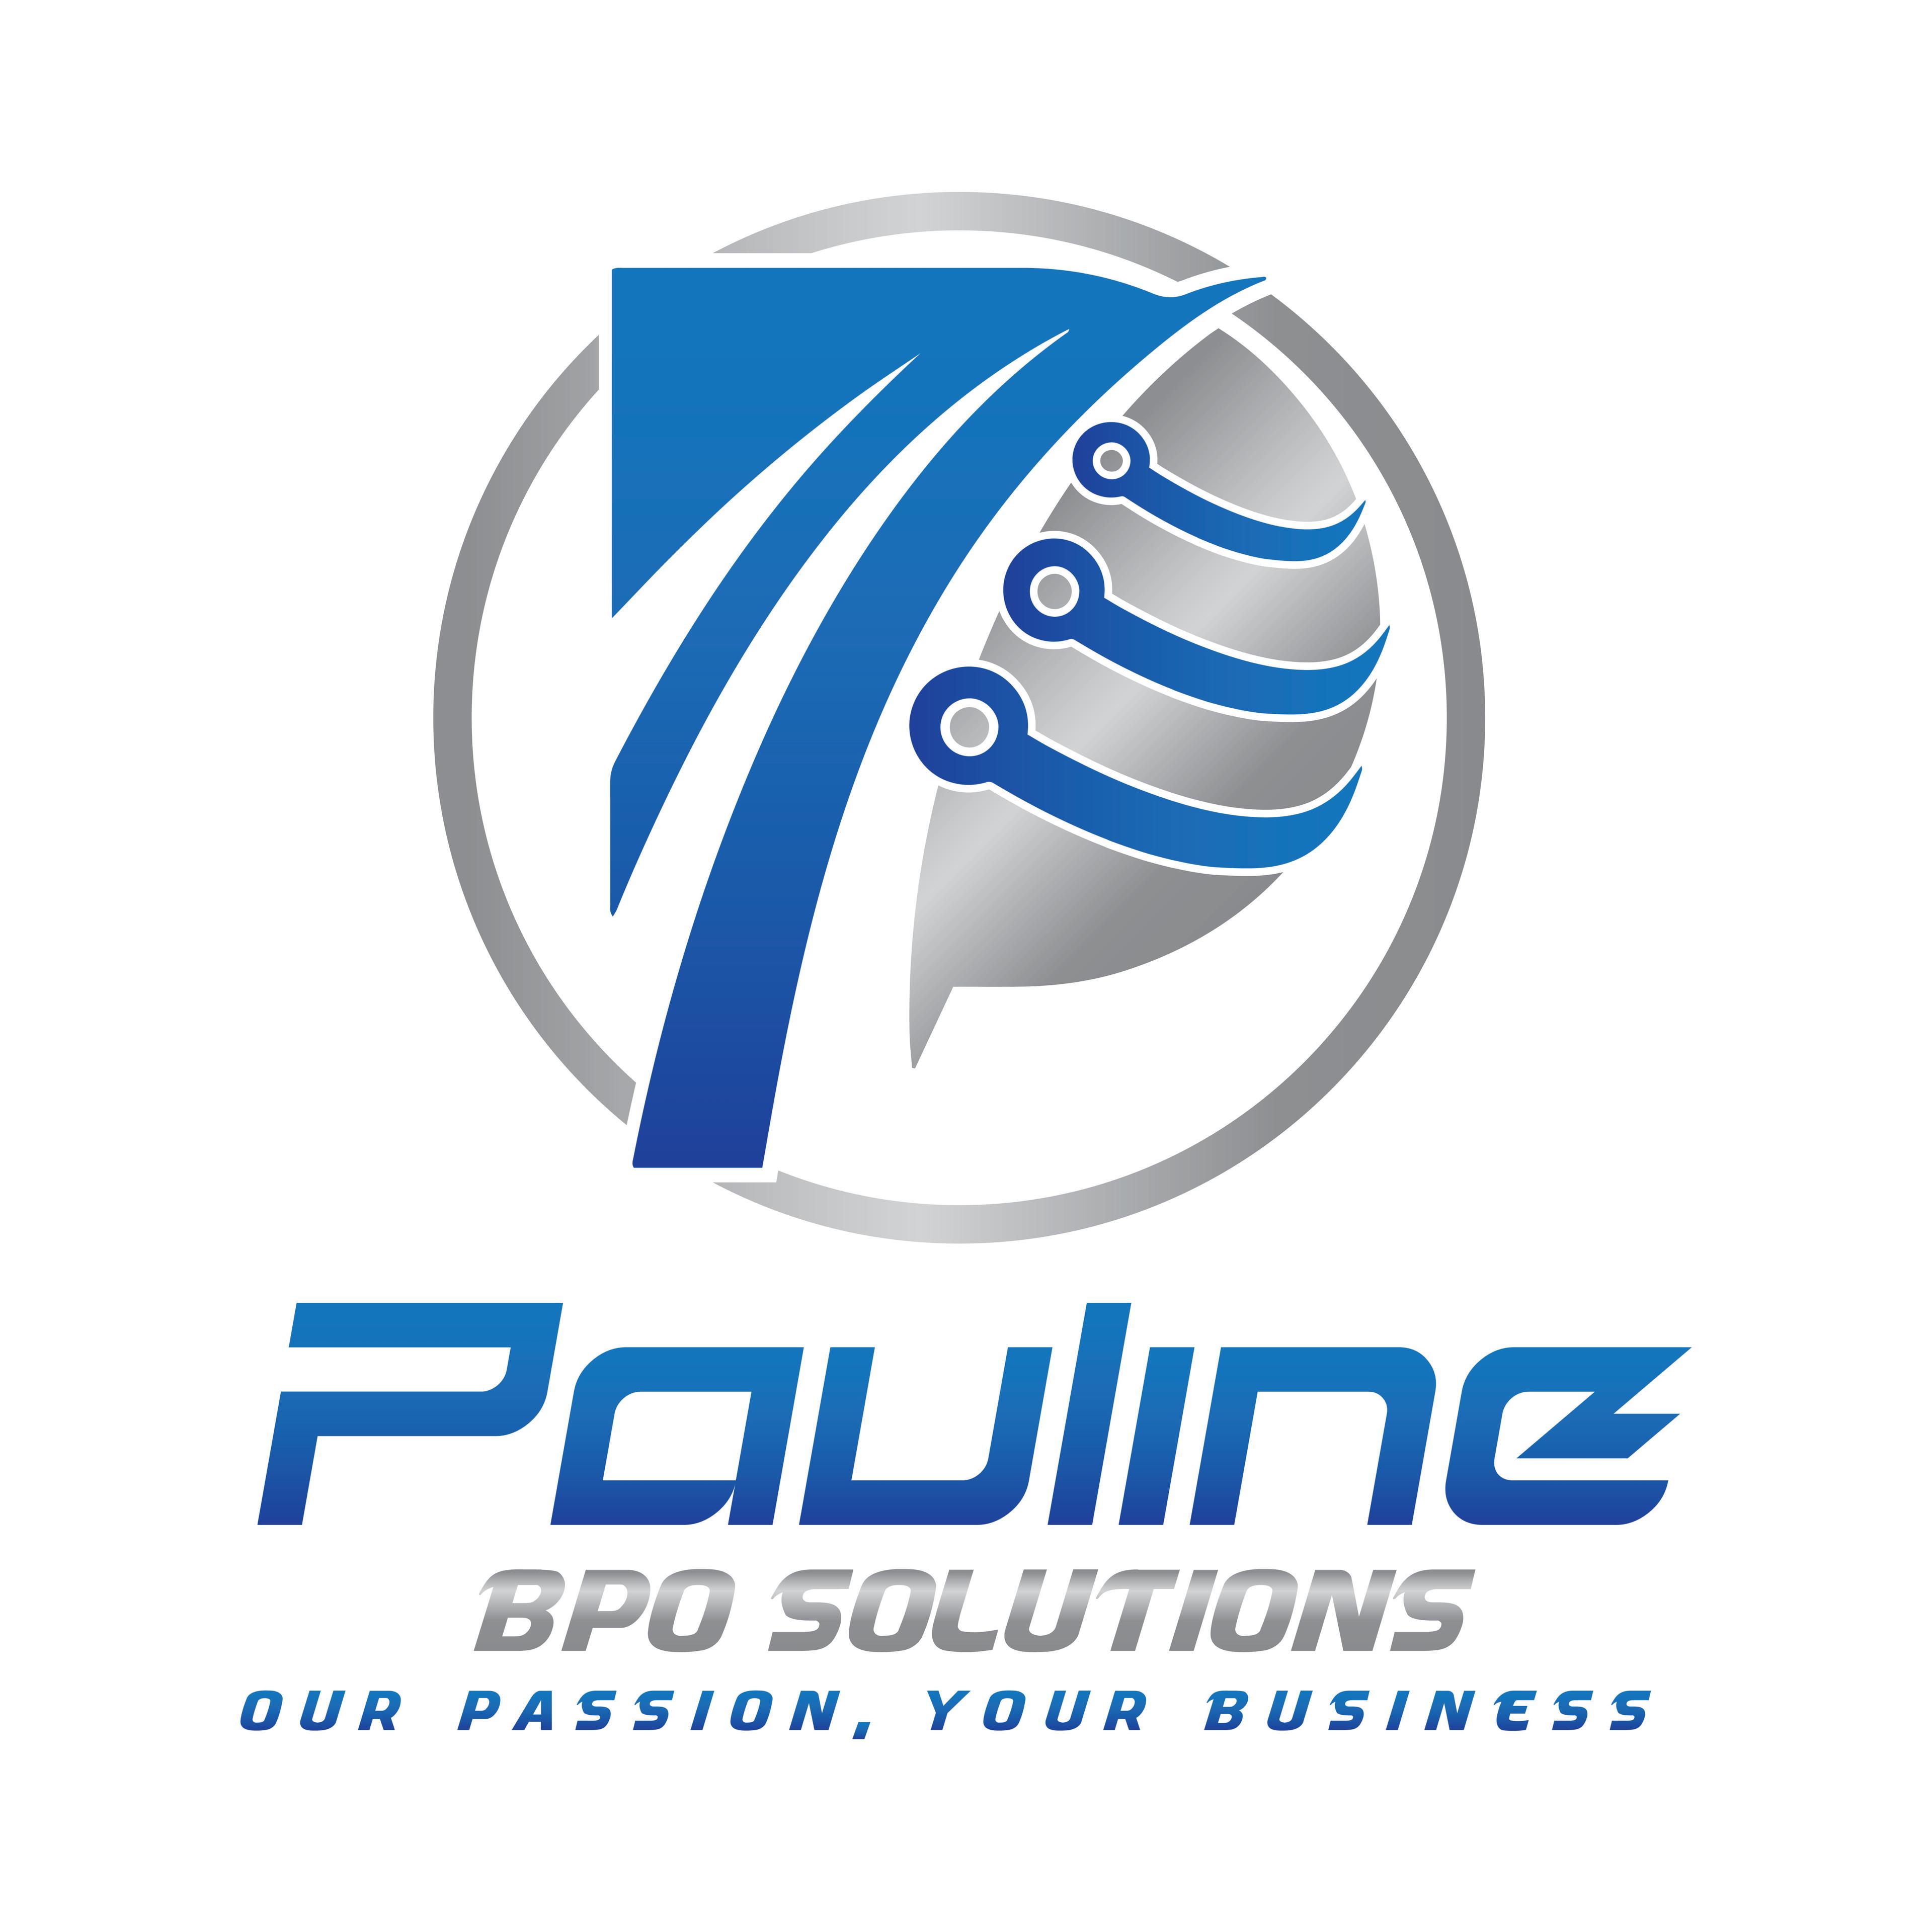 Pauline BPO Solutions